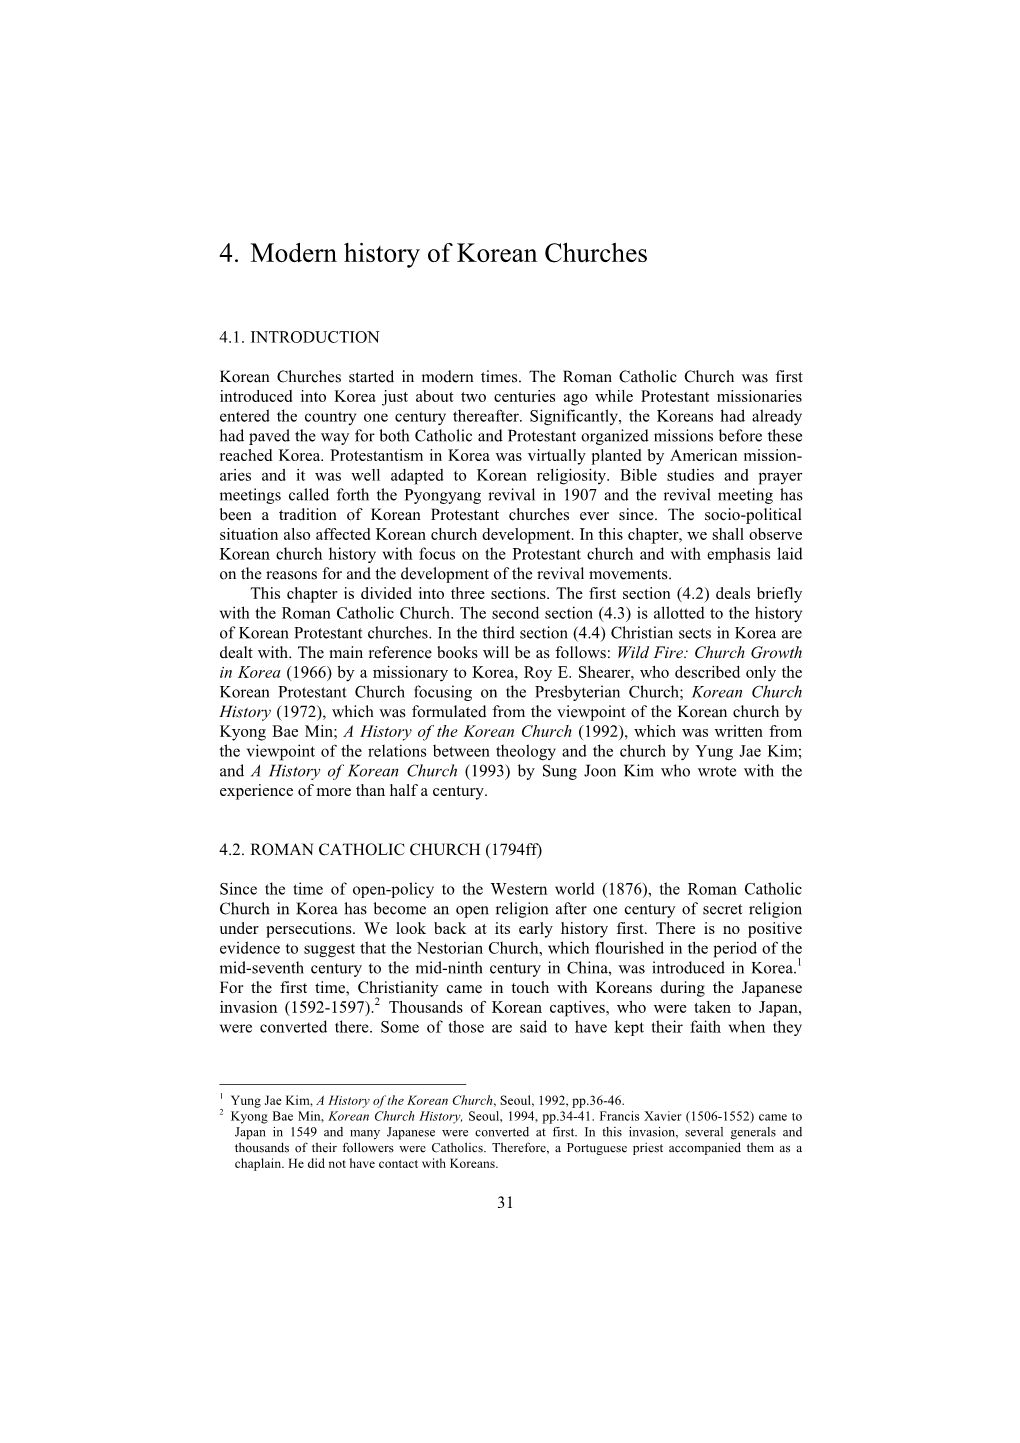 4. Modern History of Korean Churches